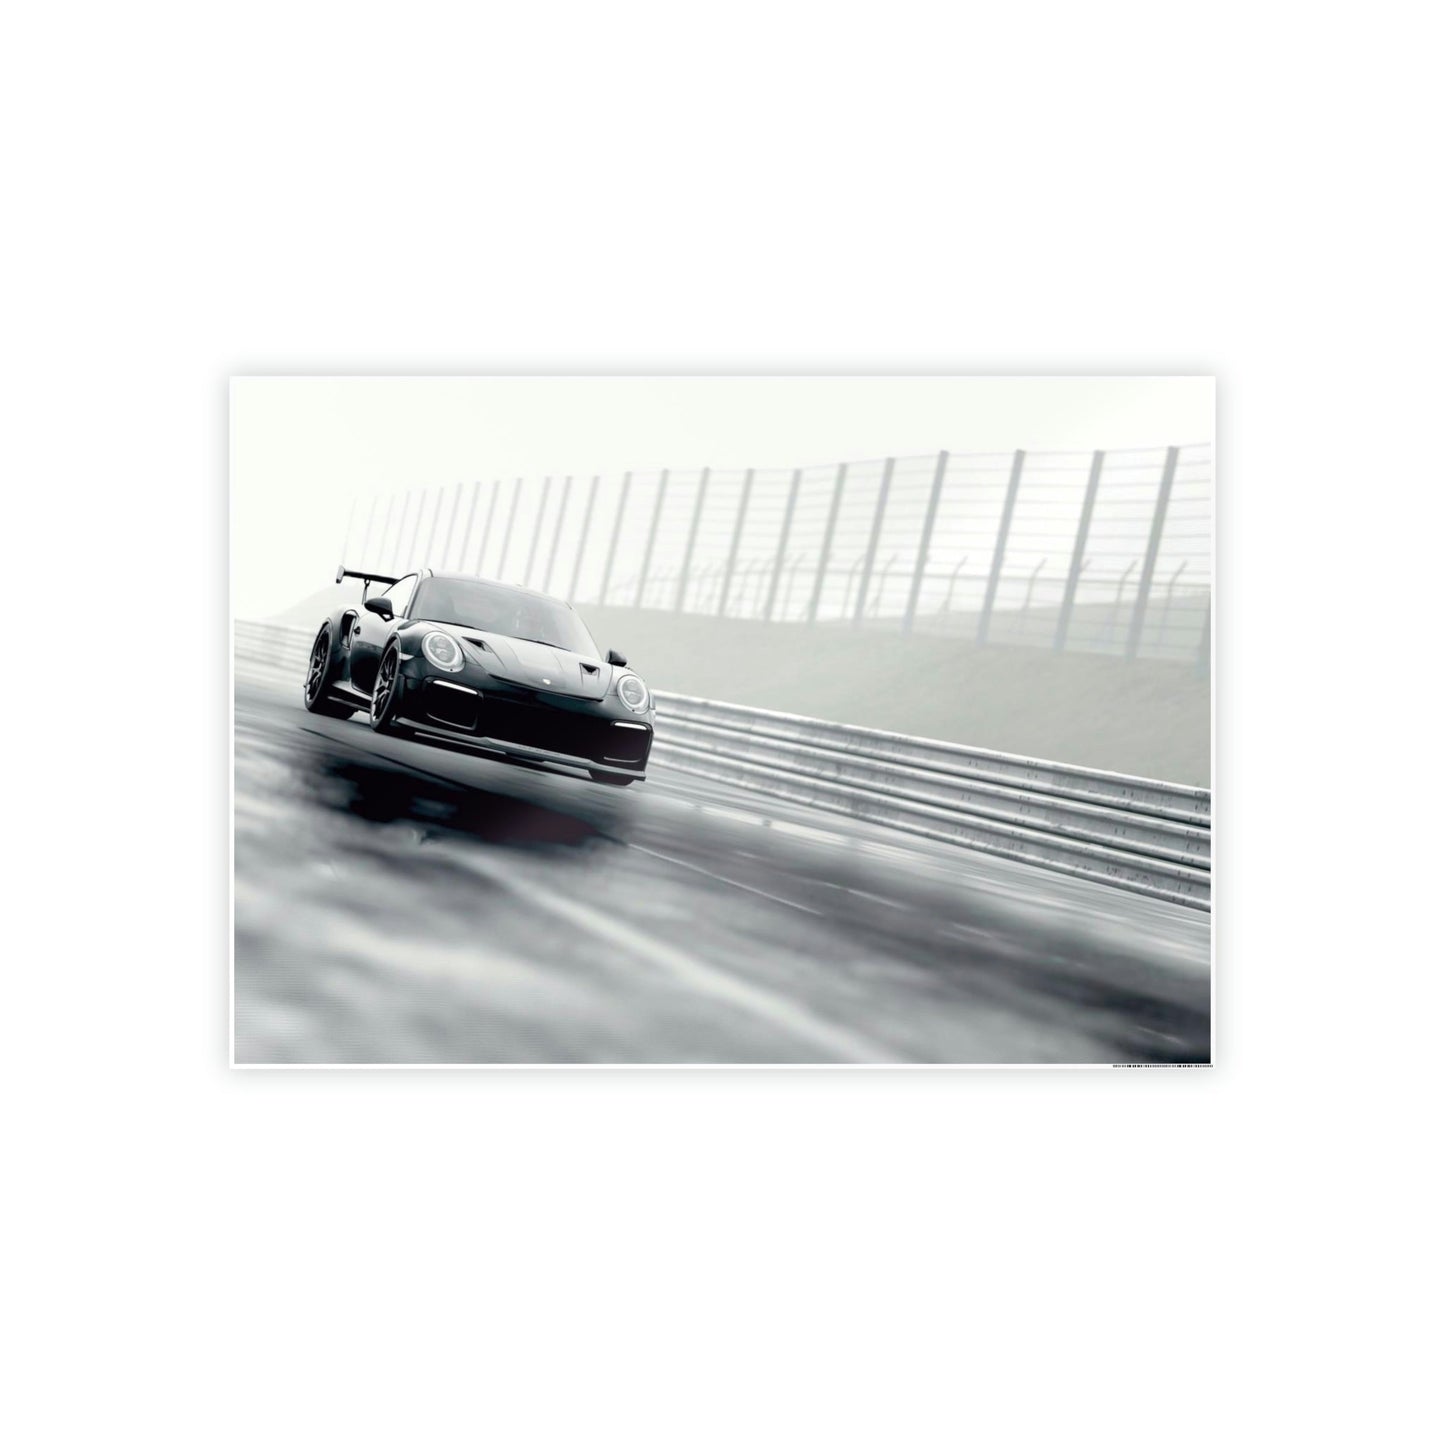 Porsche Power: A Striking Natural Canvas Print of an Iconic Sports Car